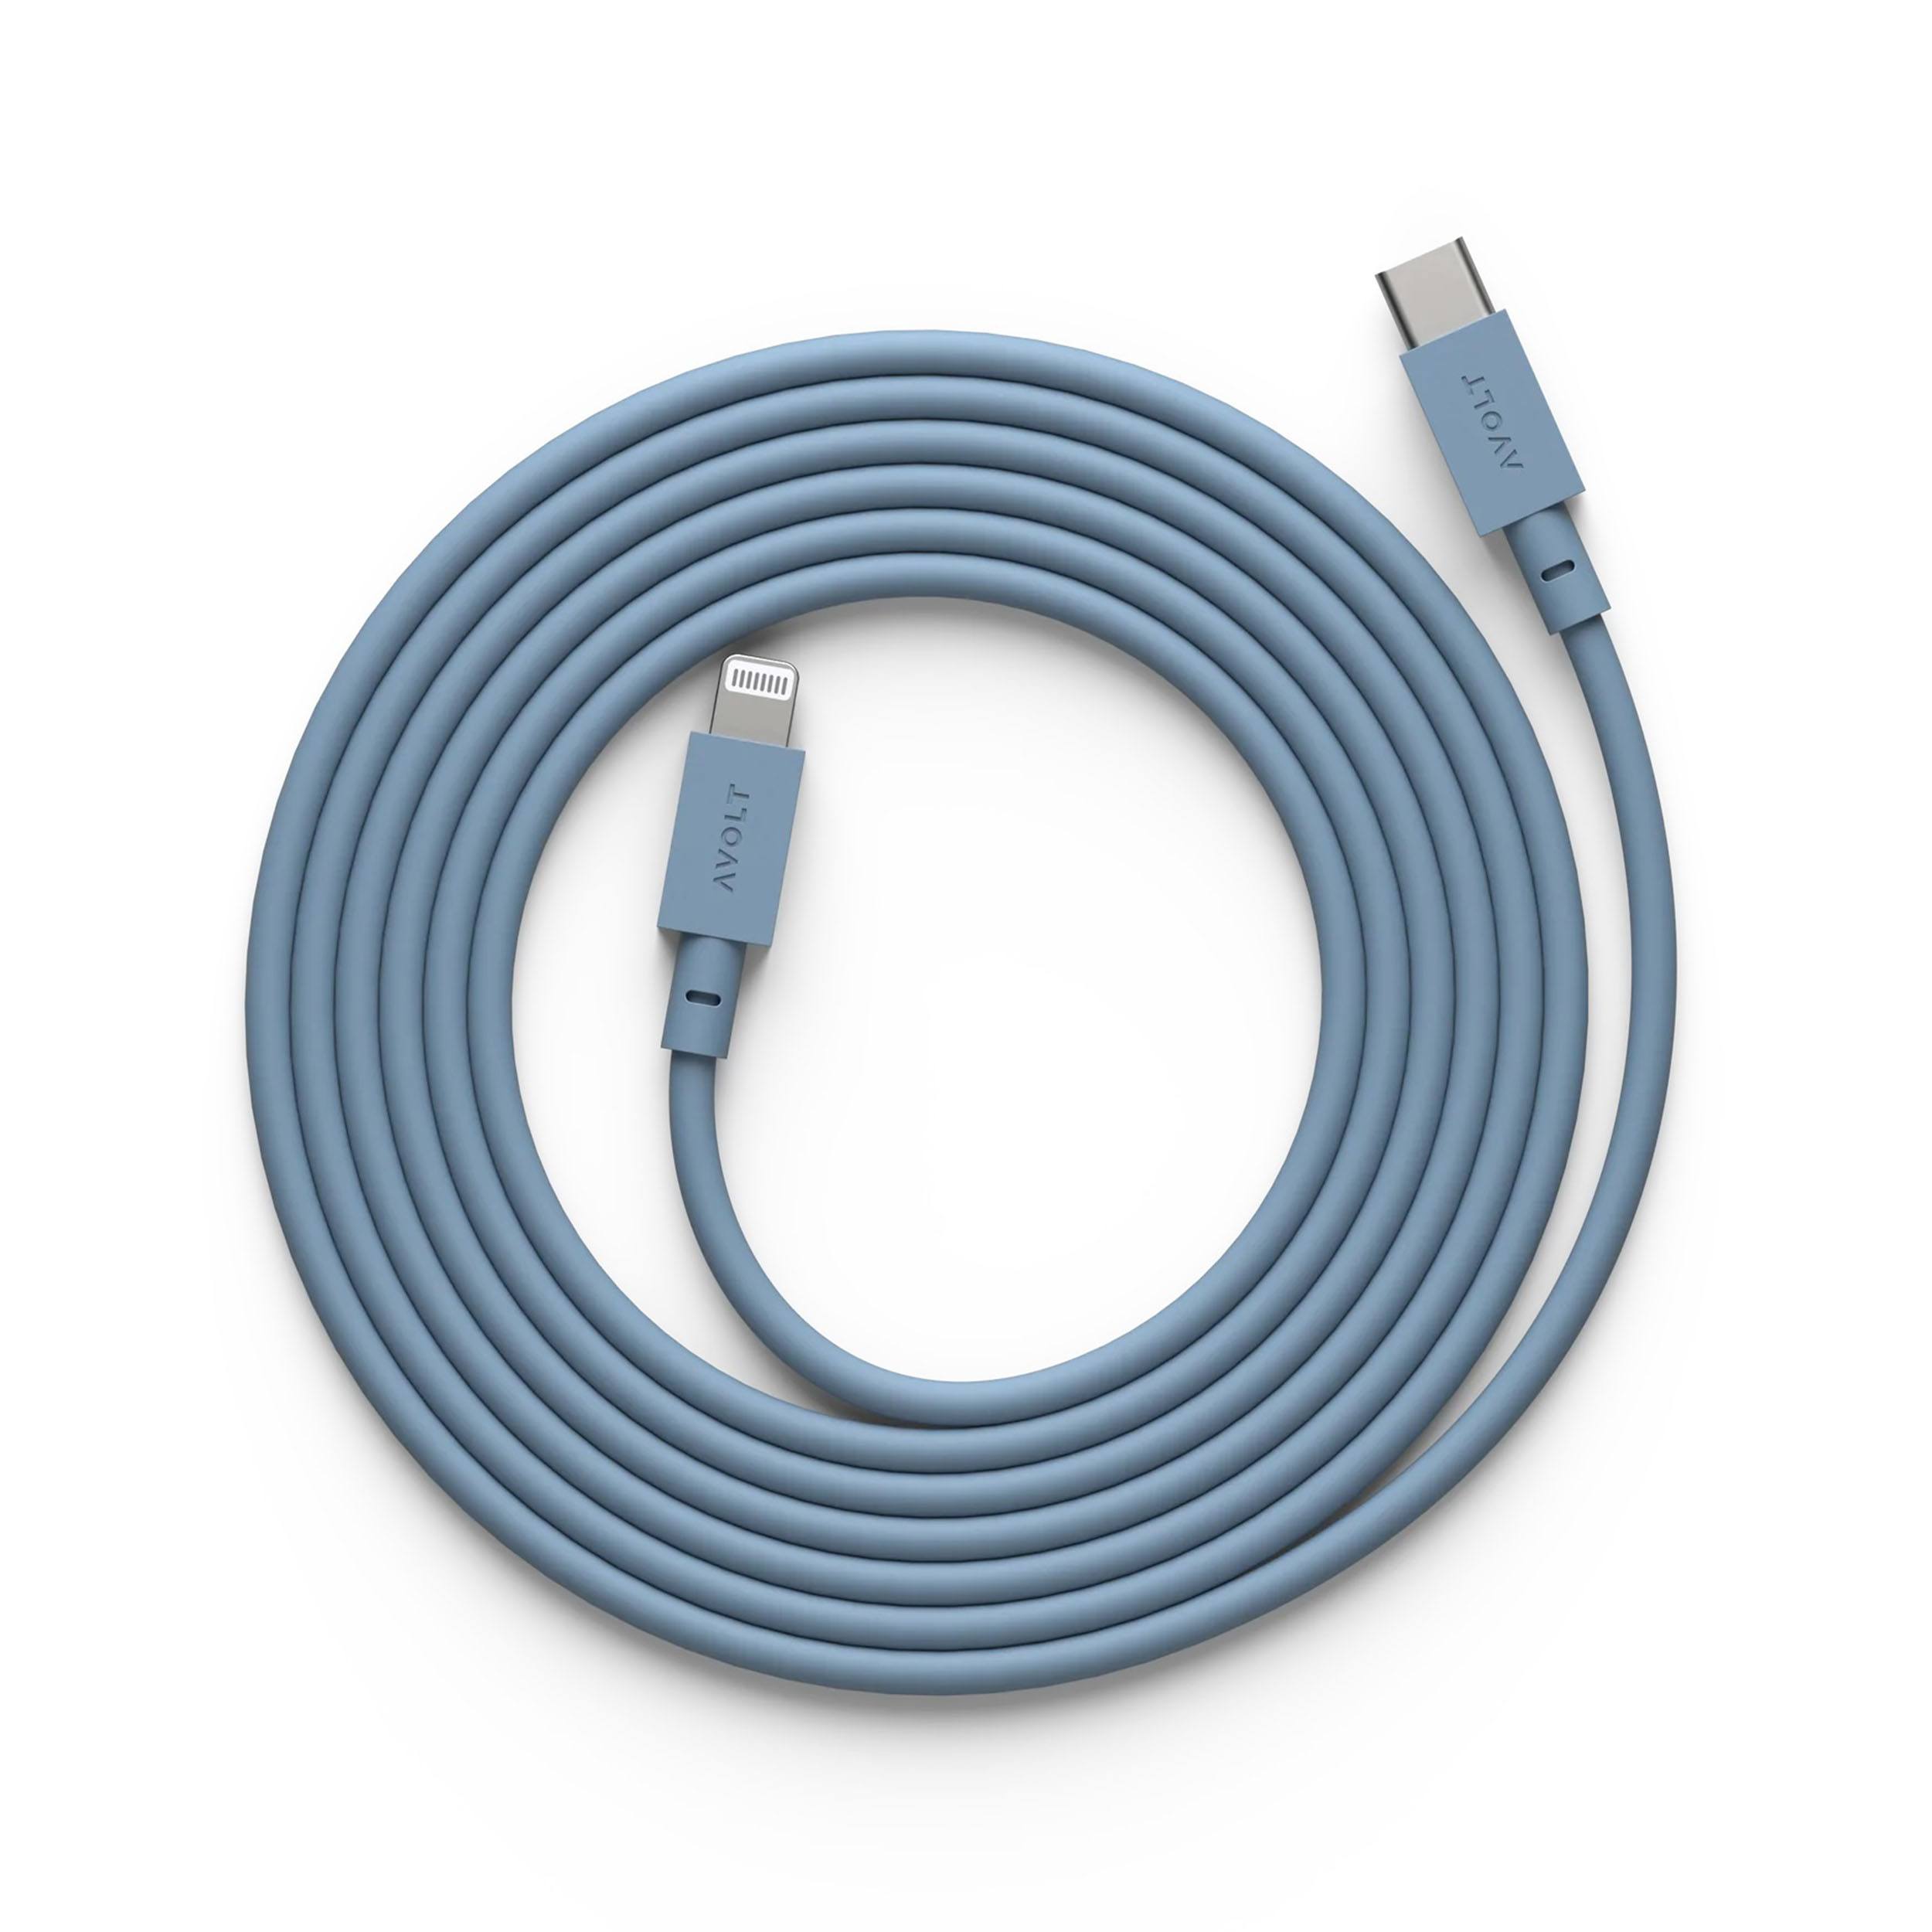 Cable 1 USB-C to Lighting Kabel